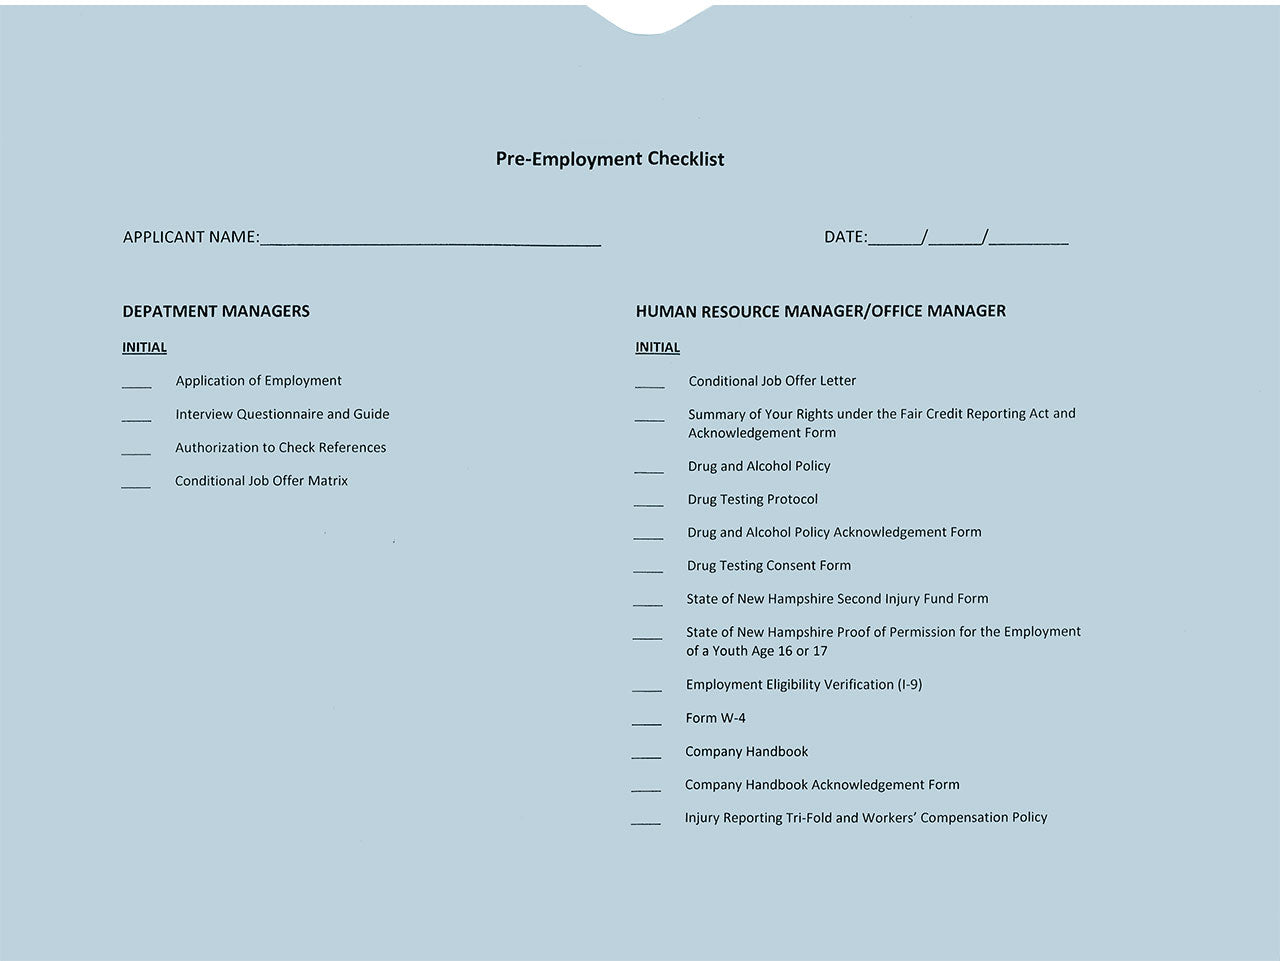 Pre-Employment Checklist Folders